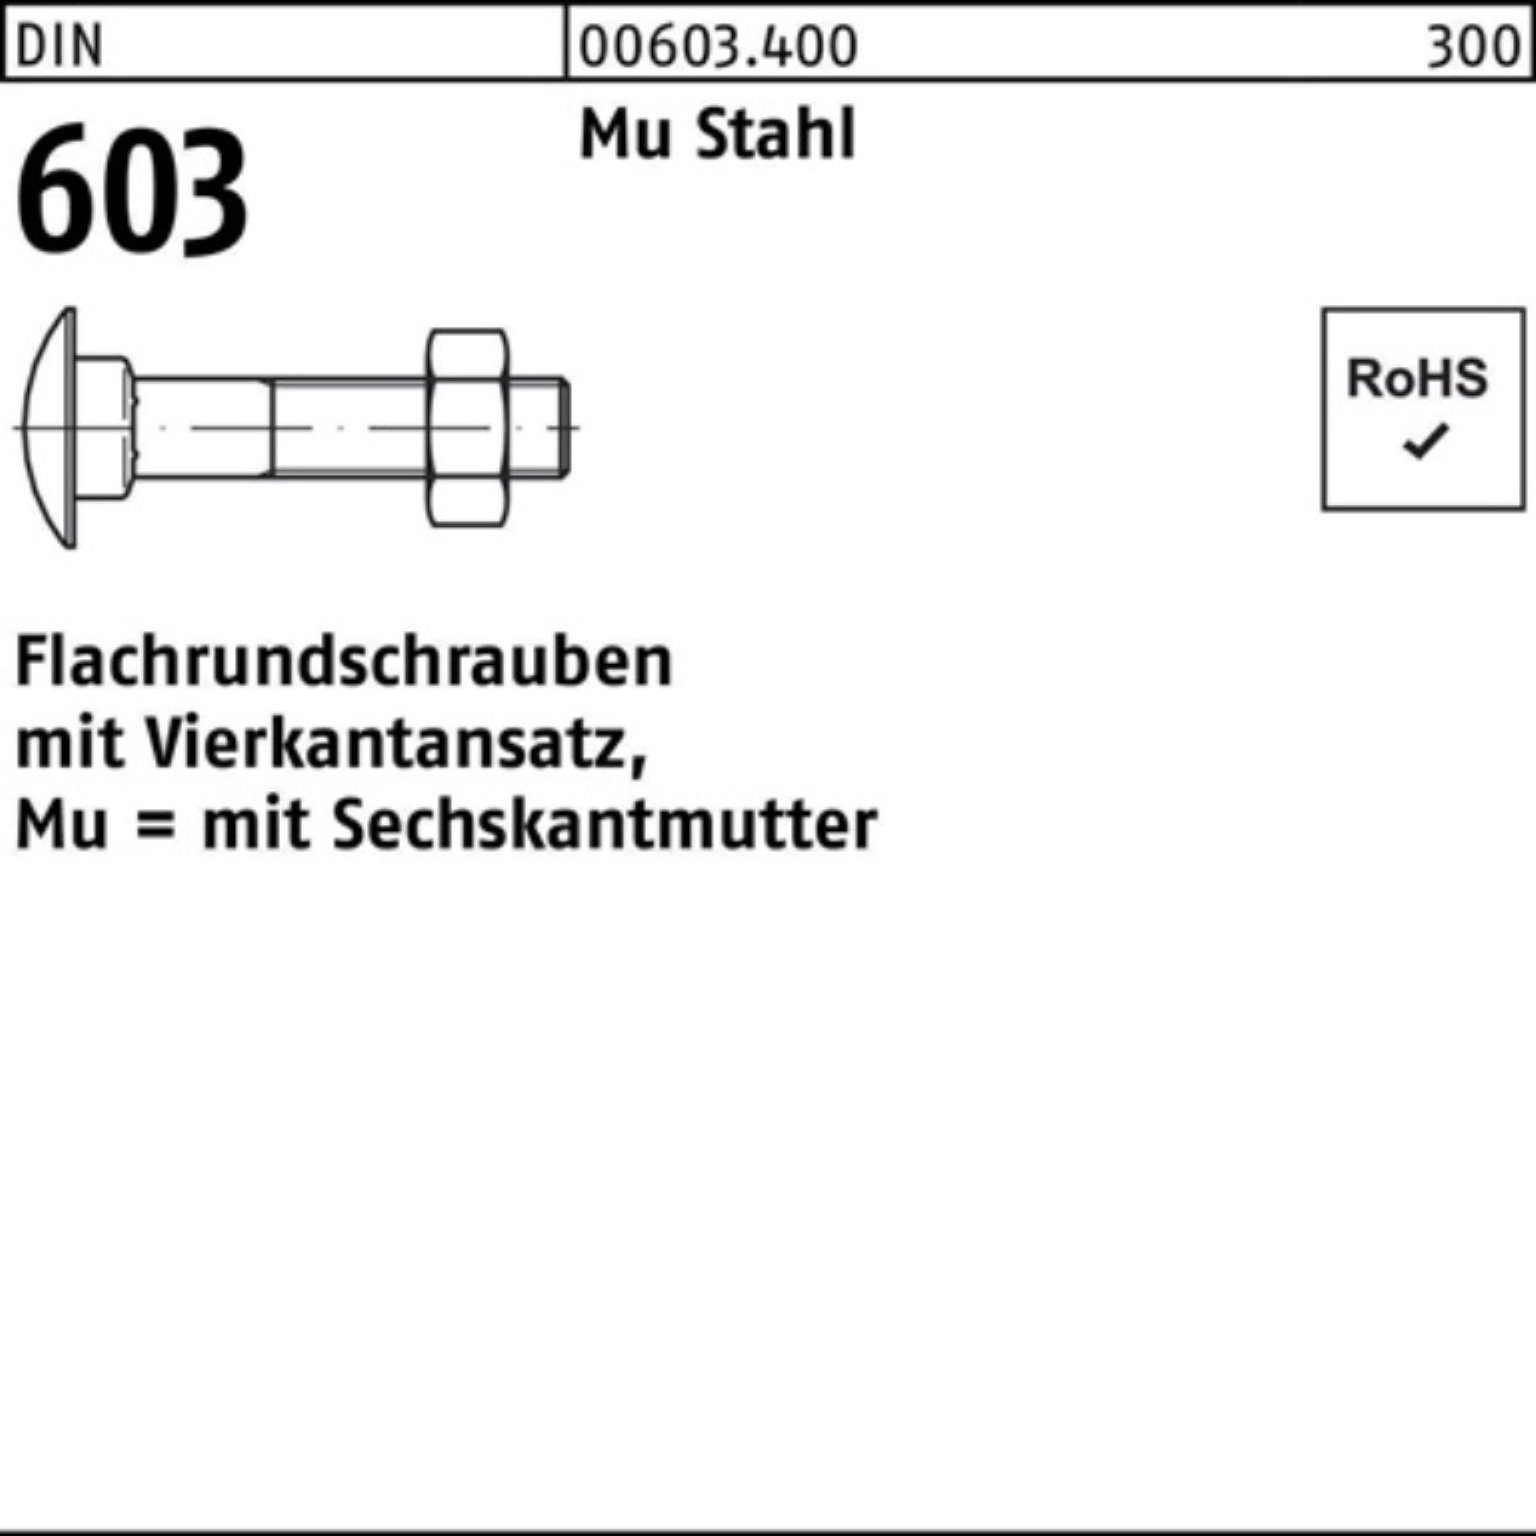 Reyher Schraube 100er Pack Flachrundschraube Vierkantansatz/6-ktmutter M16x45 DIN 603